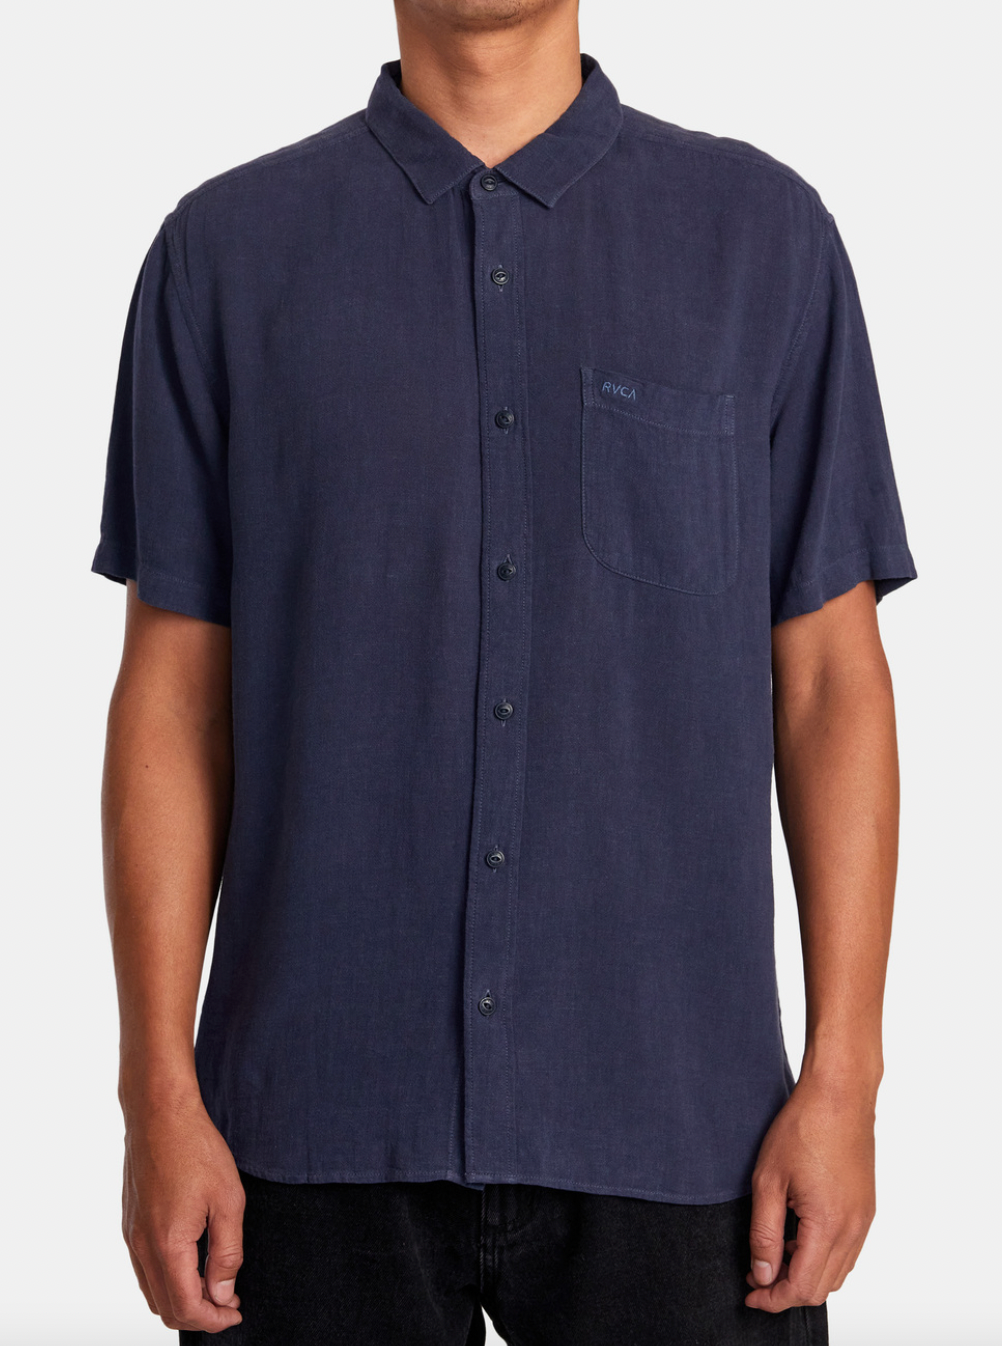 PTC Woven Short Sleeve Shirt - MOODY BLUE